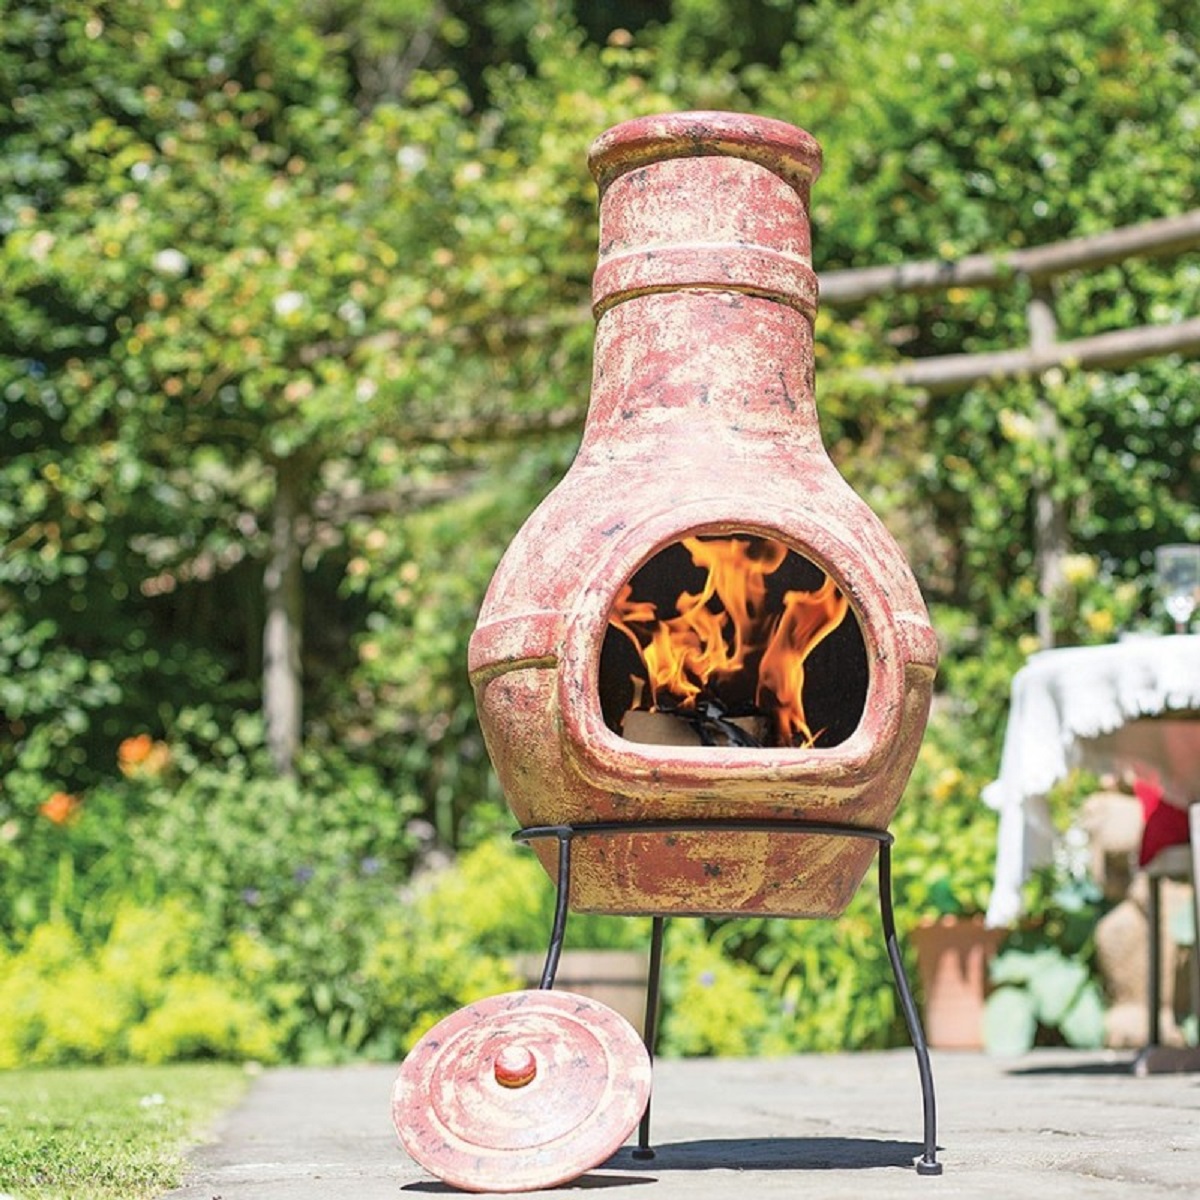 Brasero - Petite cheminée mexicaine en fonte - Barbecue